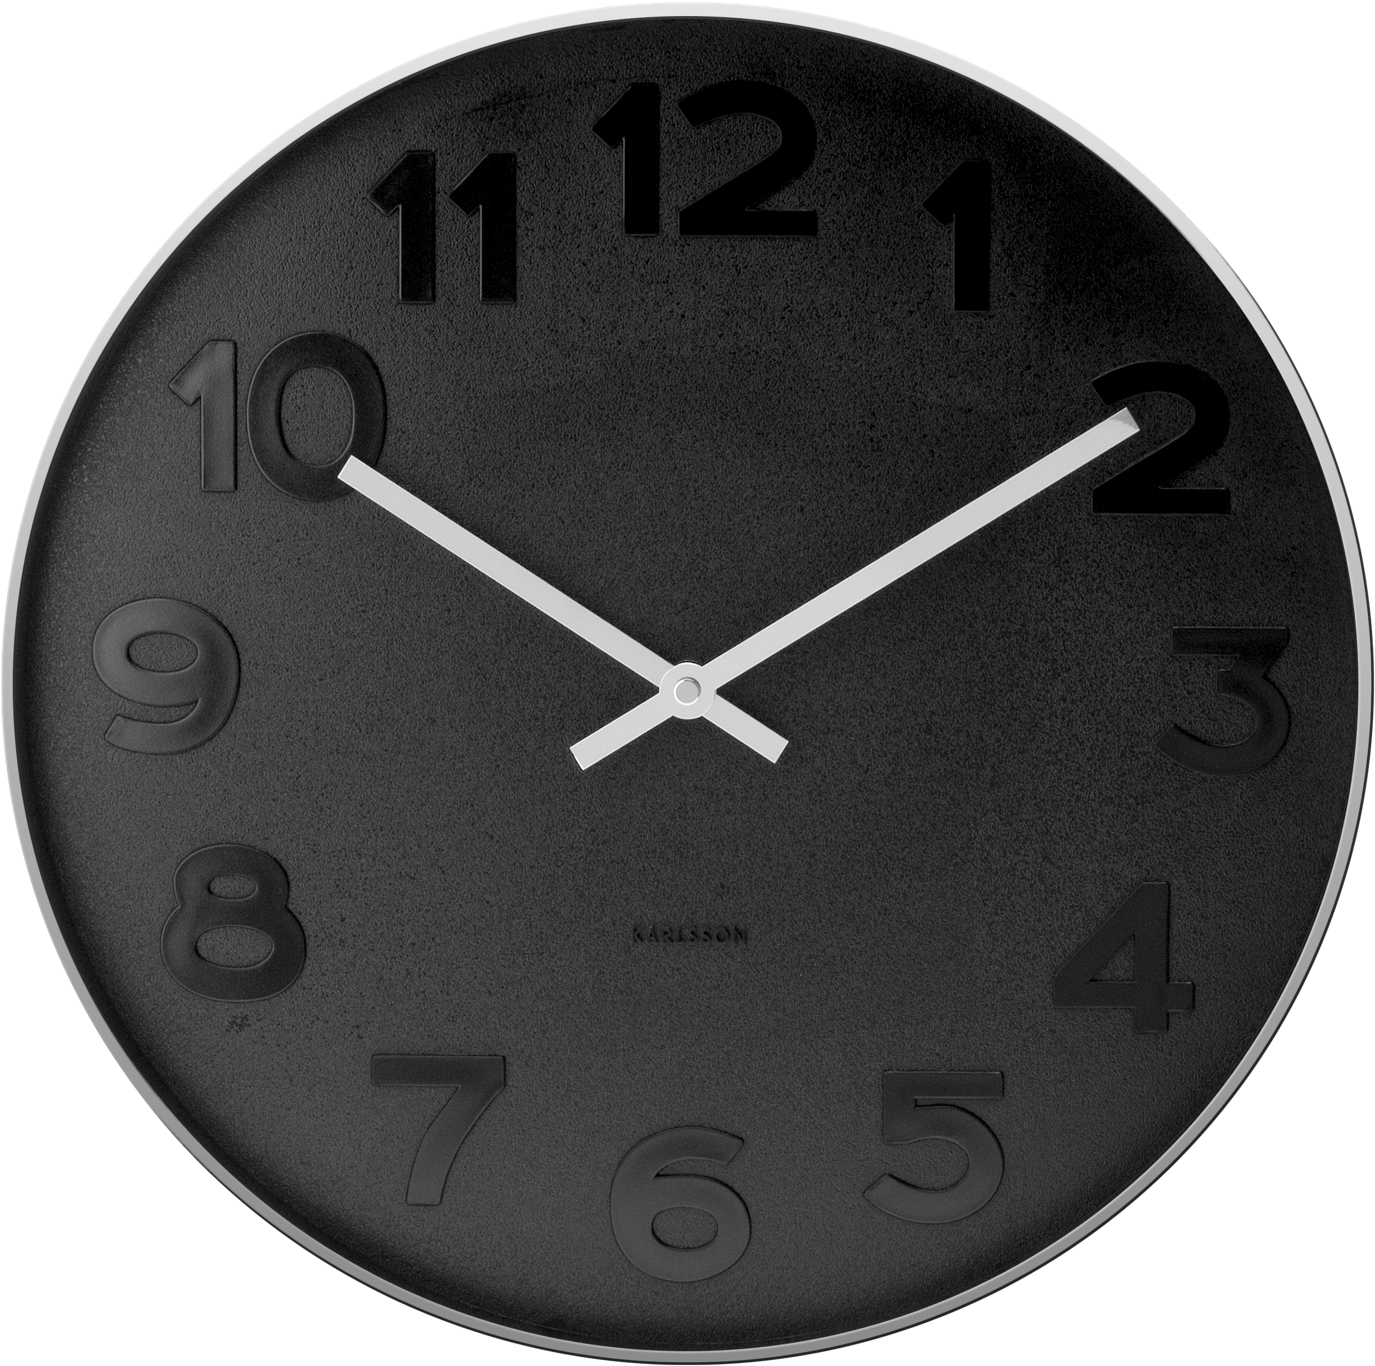 Wall Black Clock Free Download Image PNG Image